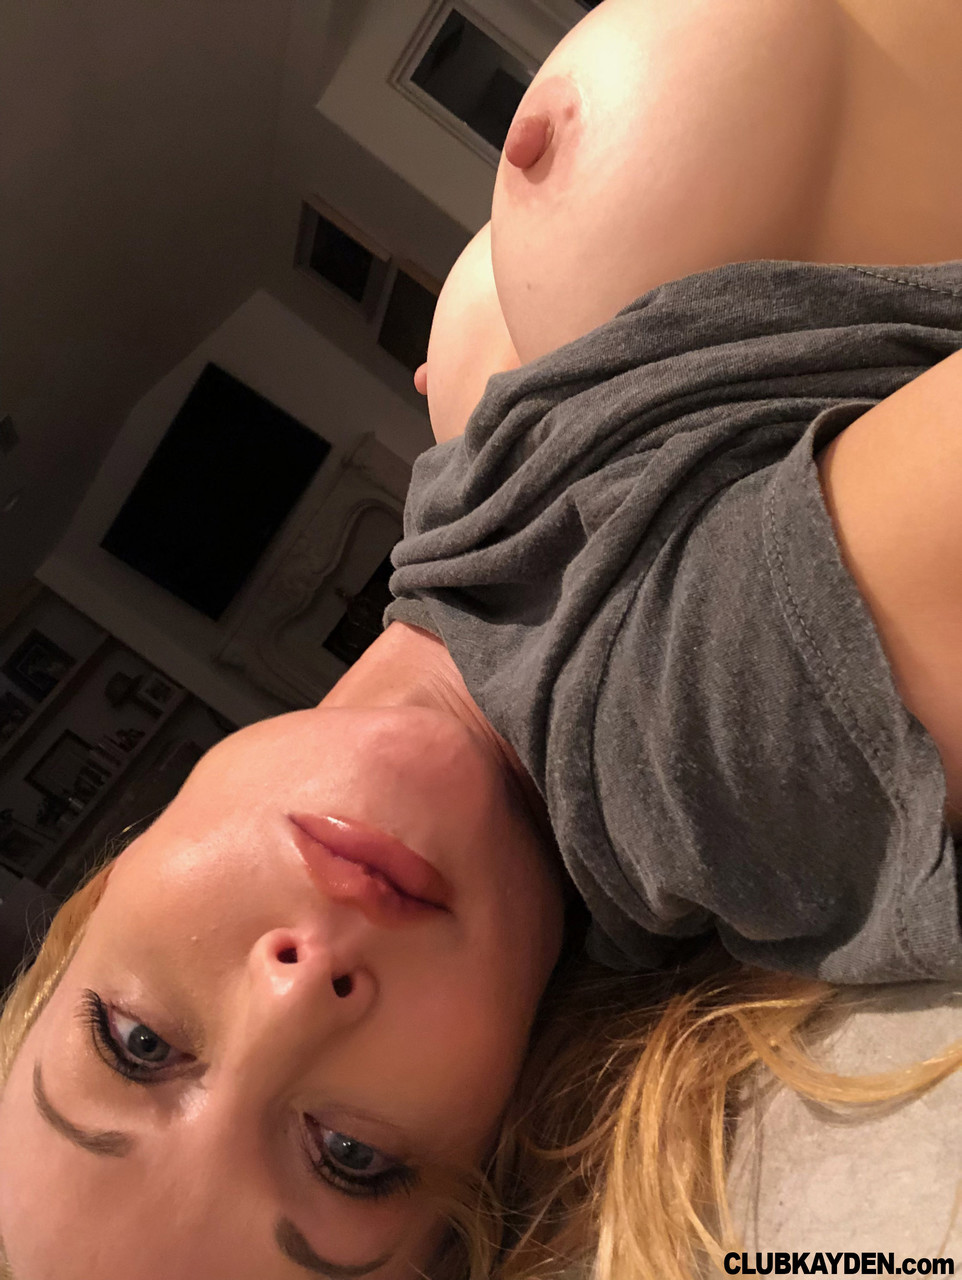 Blonde American with big tits Kayden Kross flaunts her long hard nipples 色情照片 #422613039 | Club Kayden Pics, Kayden Kross, Nipples, 手机色情